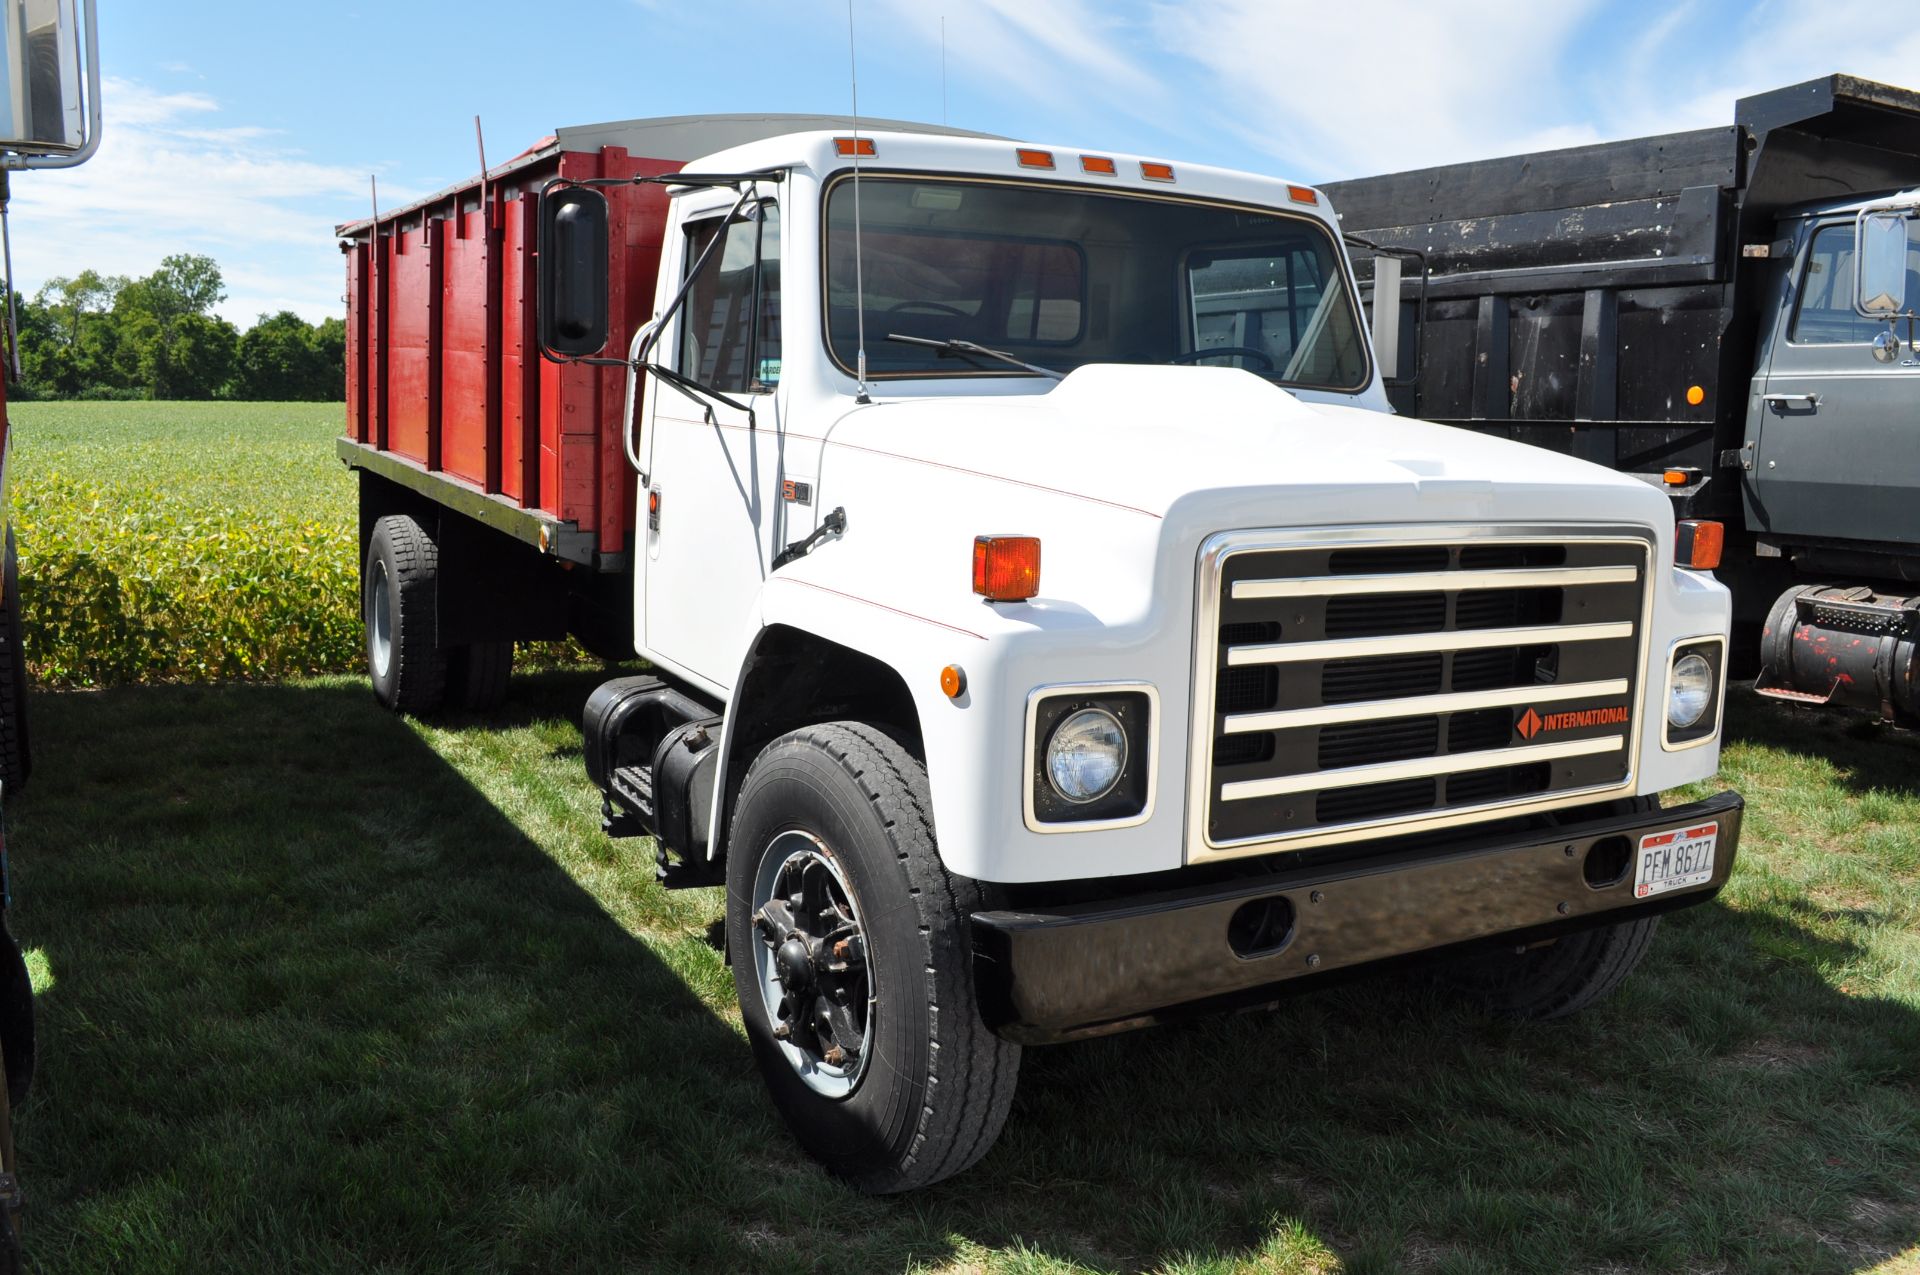 1987 International S1700 grain truck, 466 diesel, 5 + 2 trans, single axle, 205” WB, spring ride